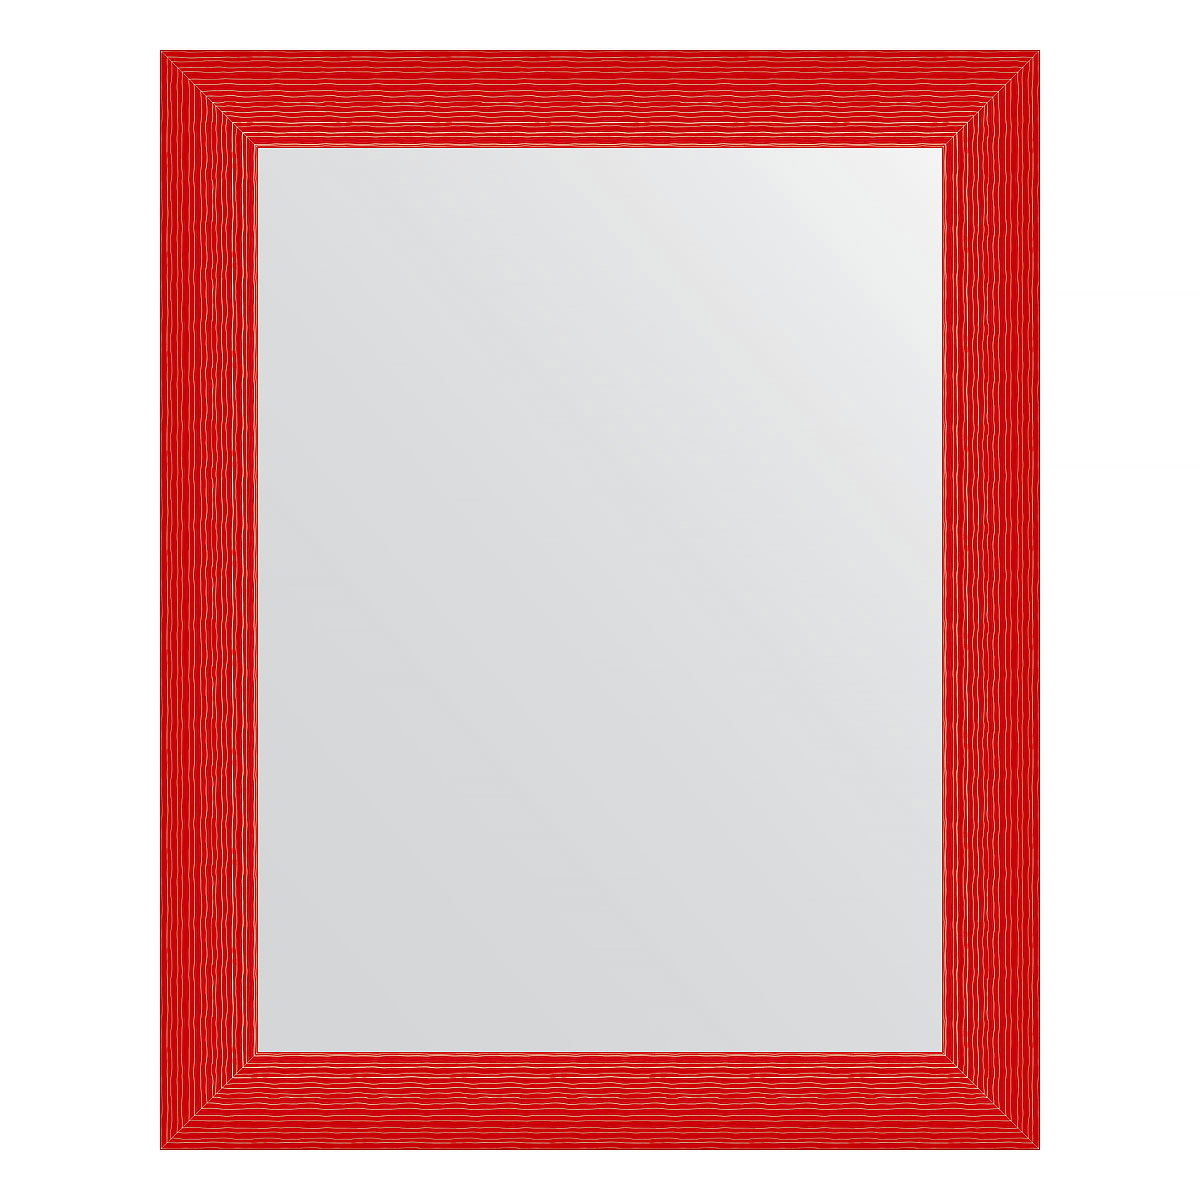 90312722 Зеркало в багетной раме красная волна 89 мм 80x100 см BY 3908 DEFENITE STLM-0179693 EVOFORM